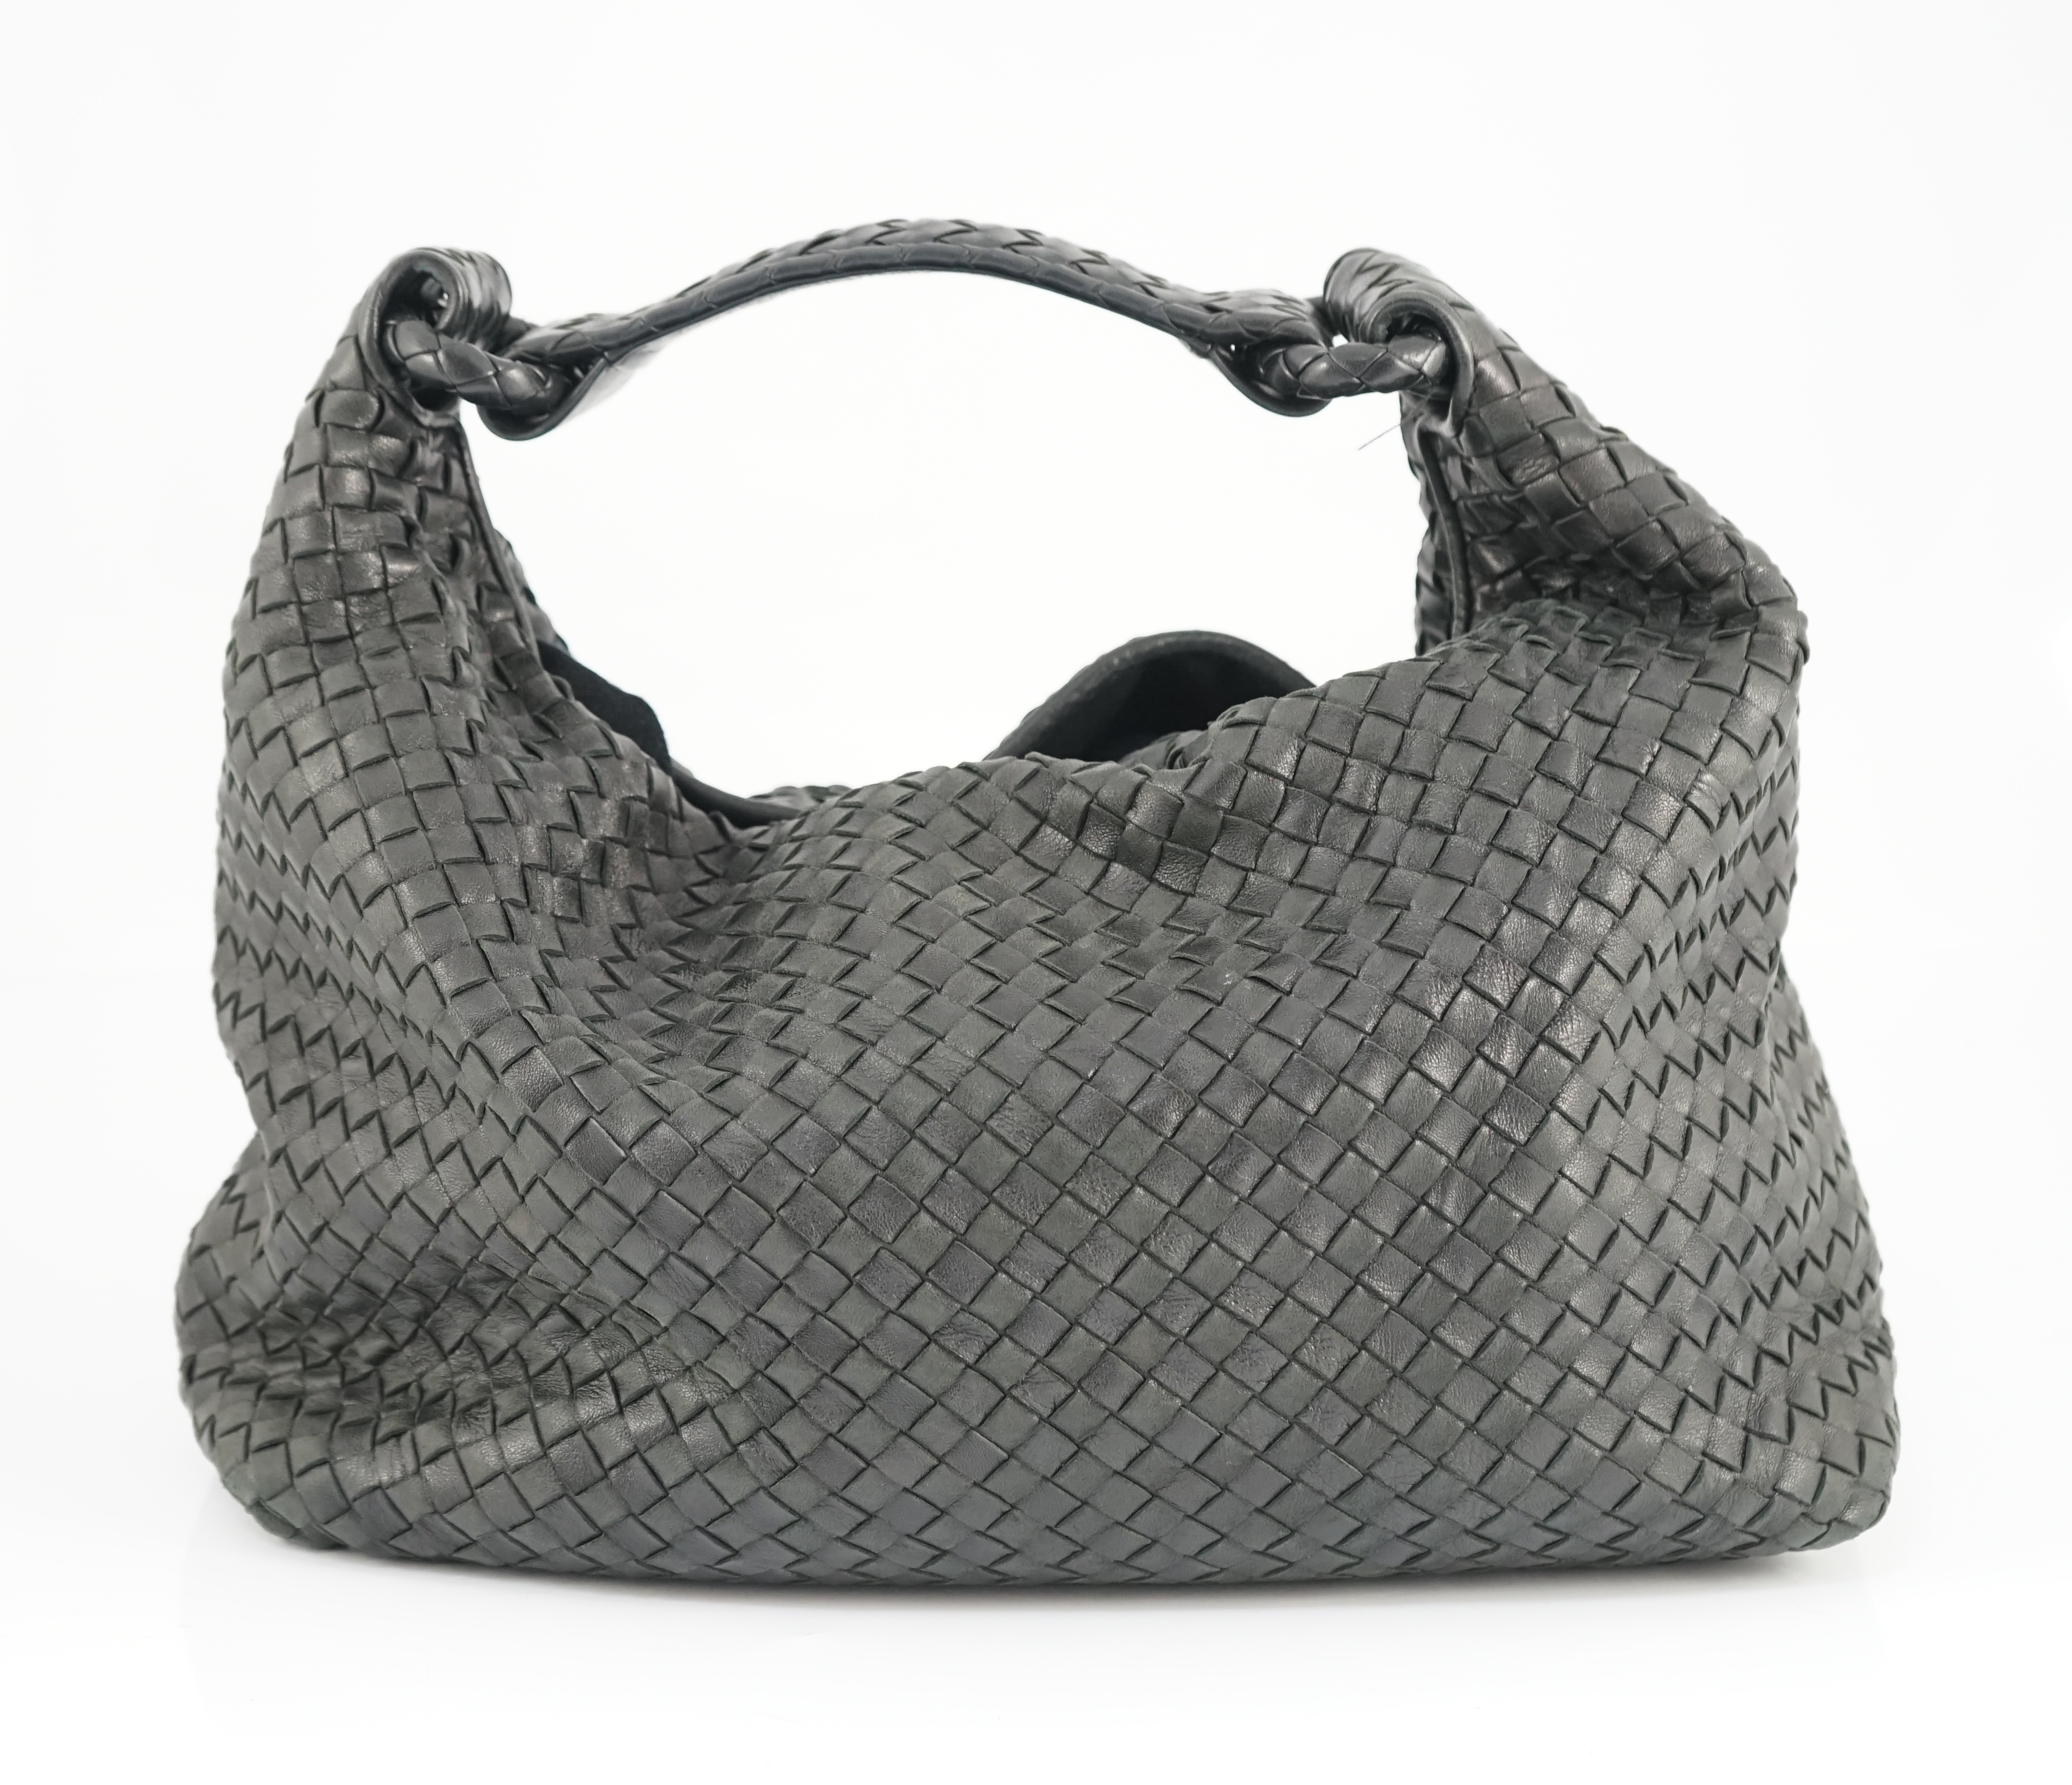 A Bottega Veneta intrecciato-weave medium black leather hobo bag, width 35cm, depth 15cm, height approx. 26cm